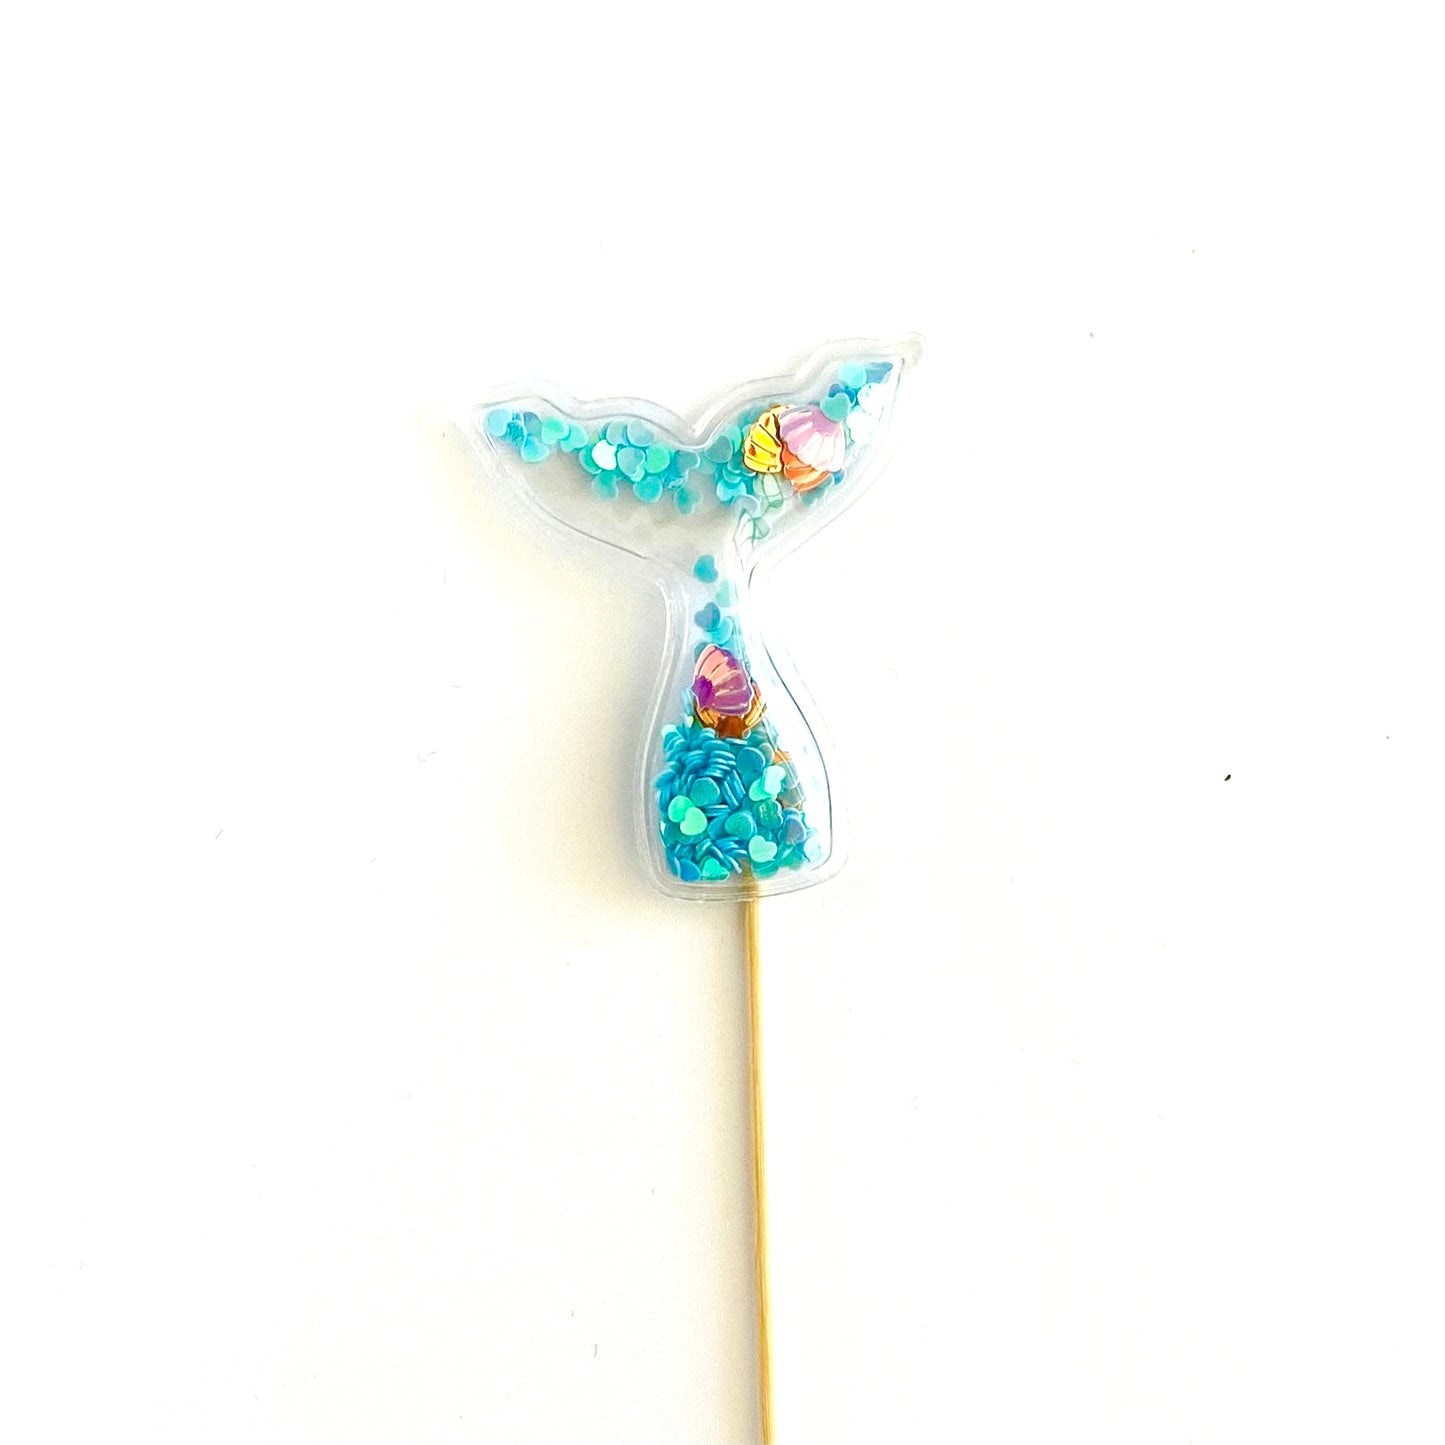 Confetti Filled PVC Cake Topper - Mermaid Tail